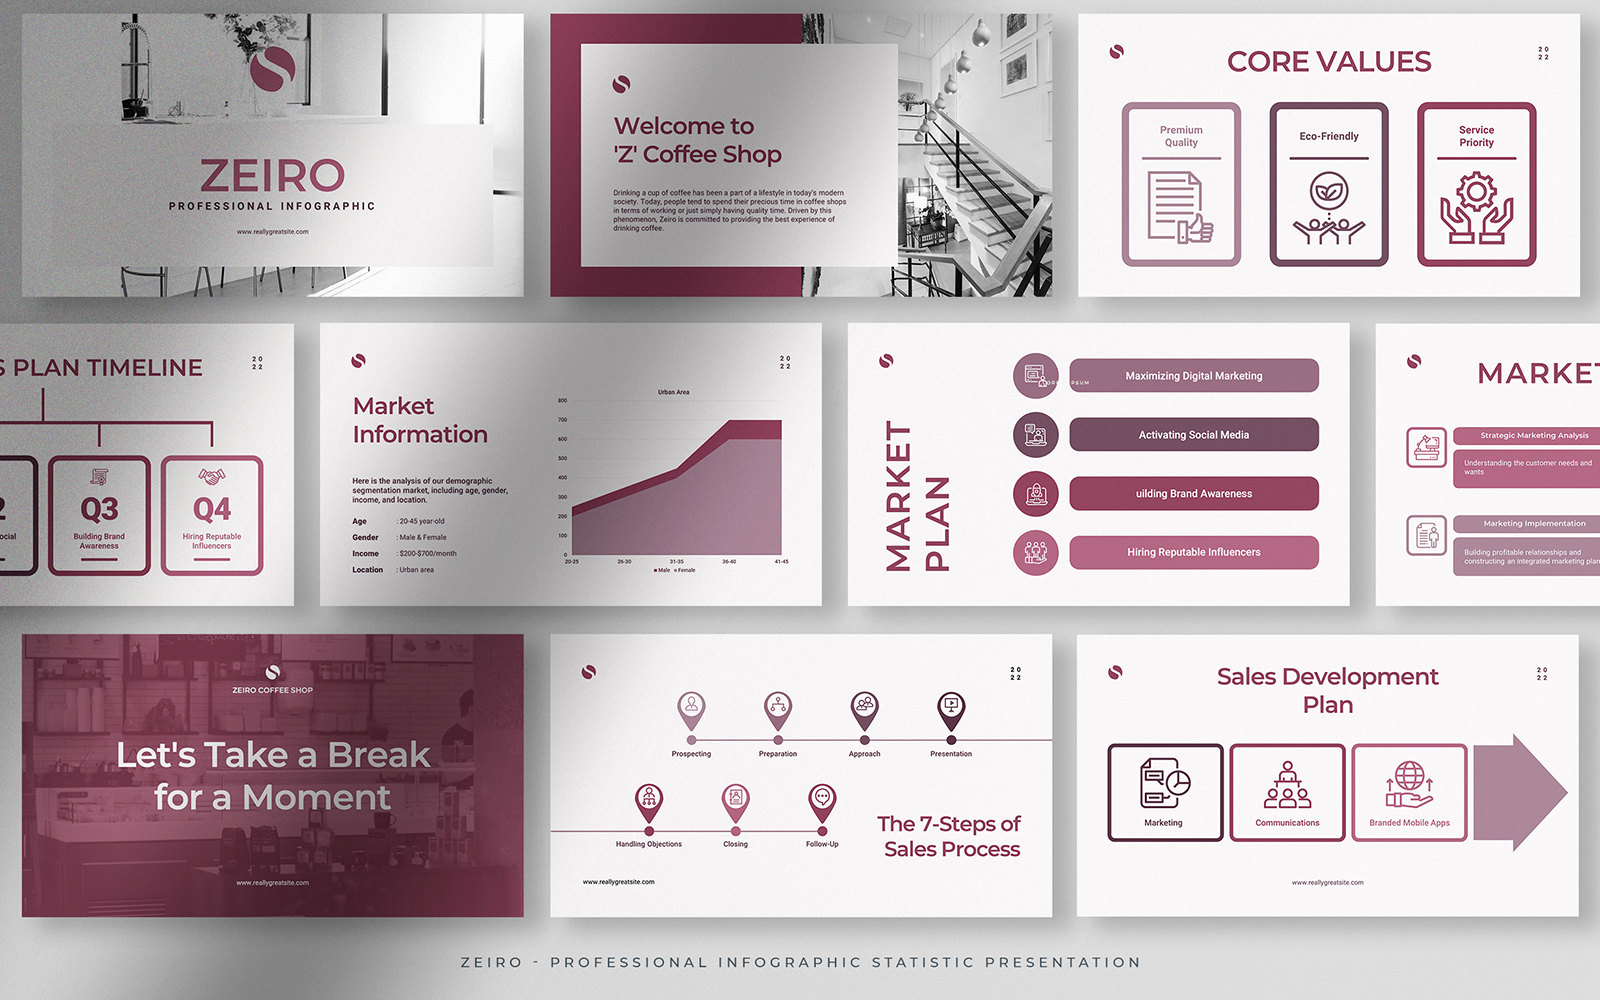 Zeiro – White Burgundy Professional Infographic Statistic Presentation